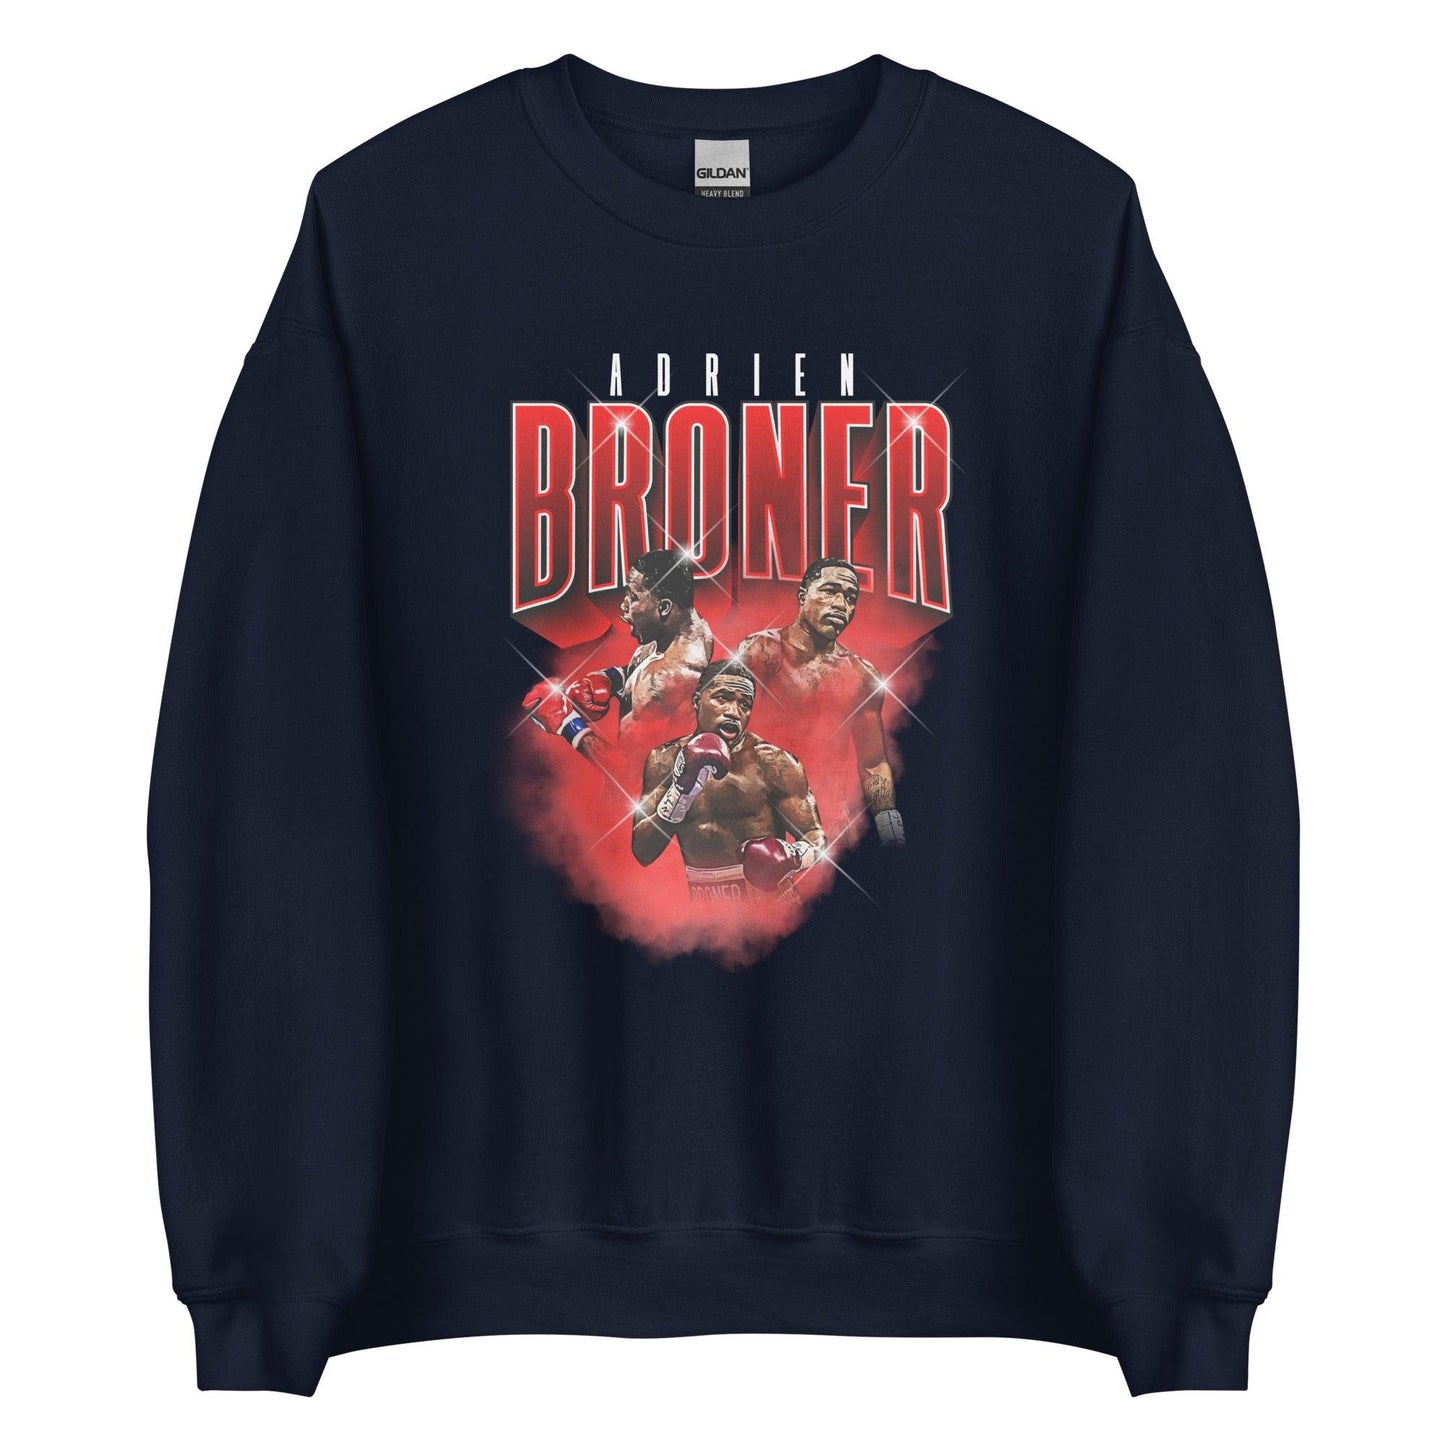 Adrien Broner "Vintage" Sweatshirt - Fan Arch